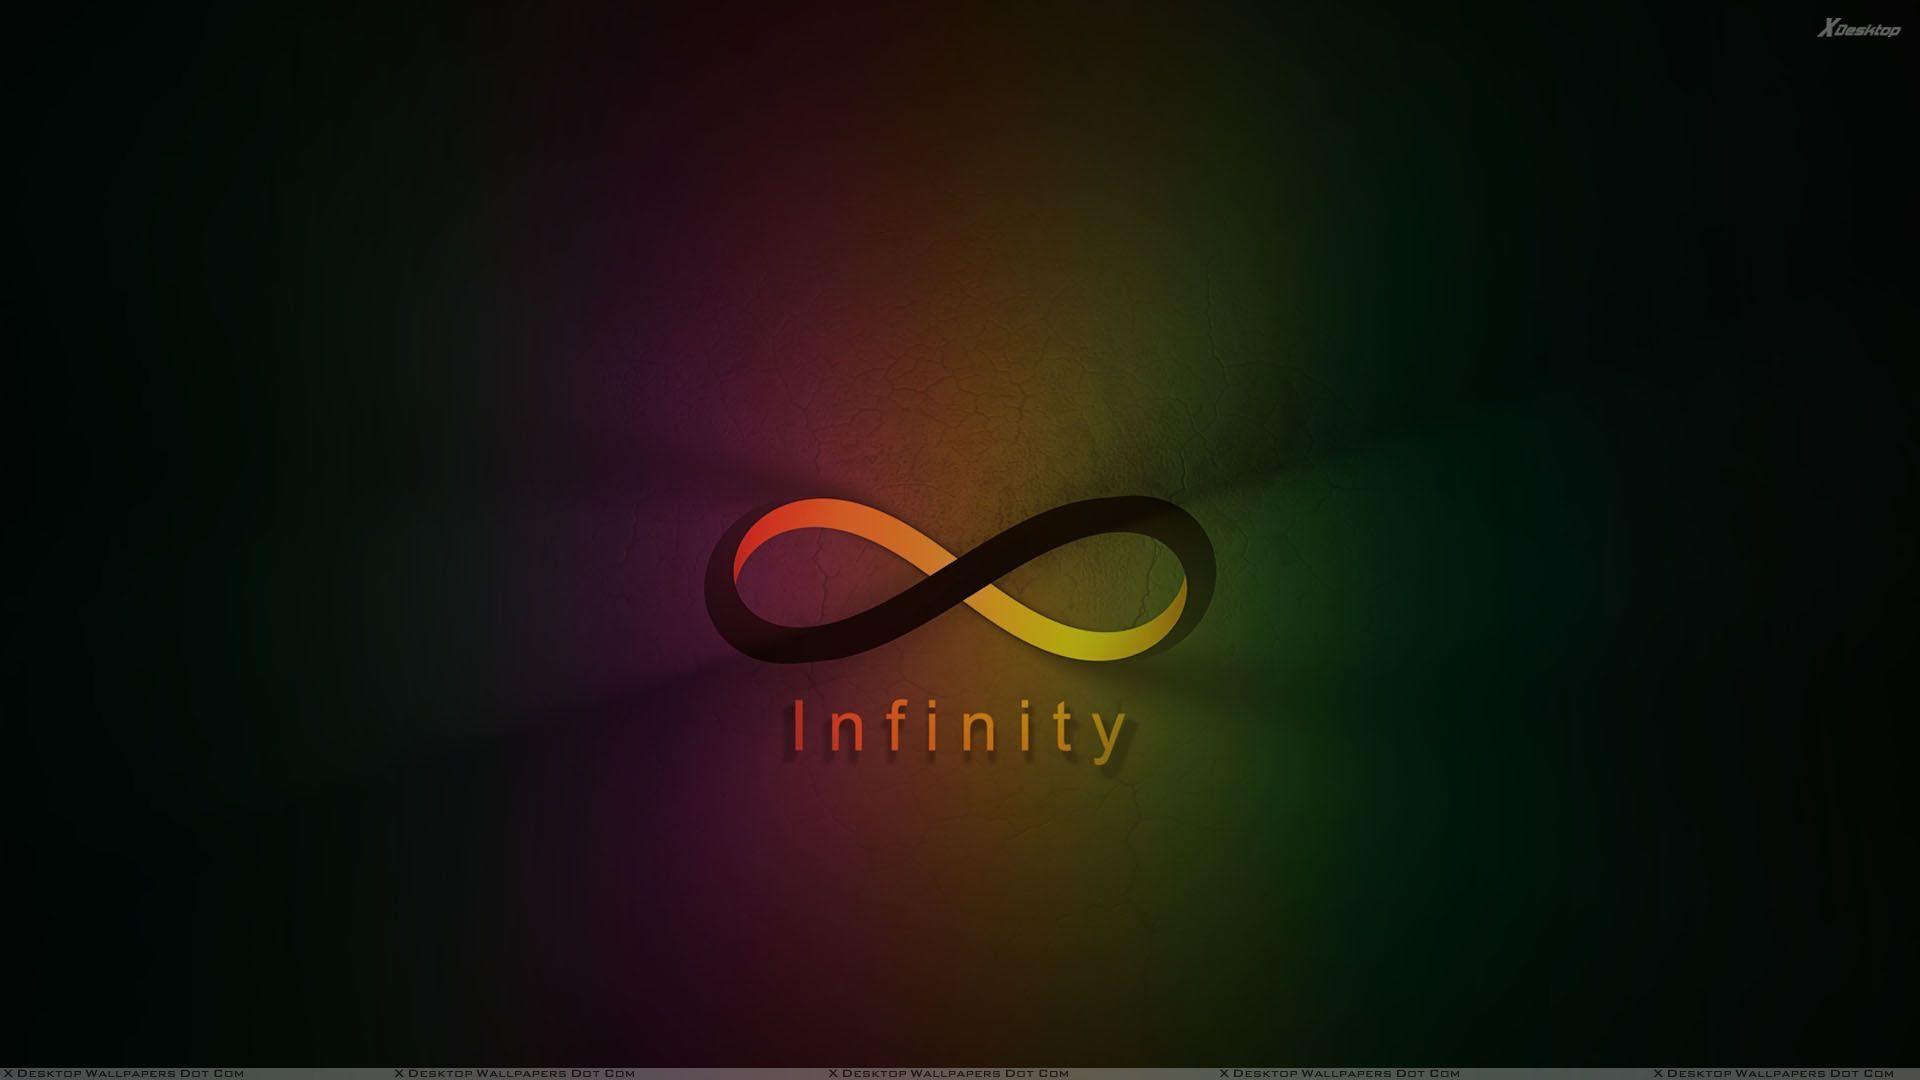 Infinity Background Images  Free Download on Freepik